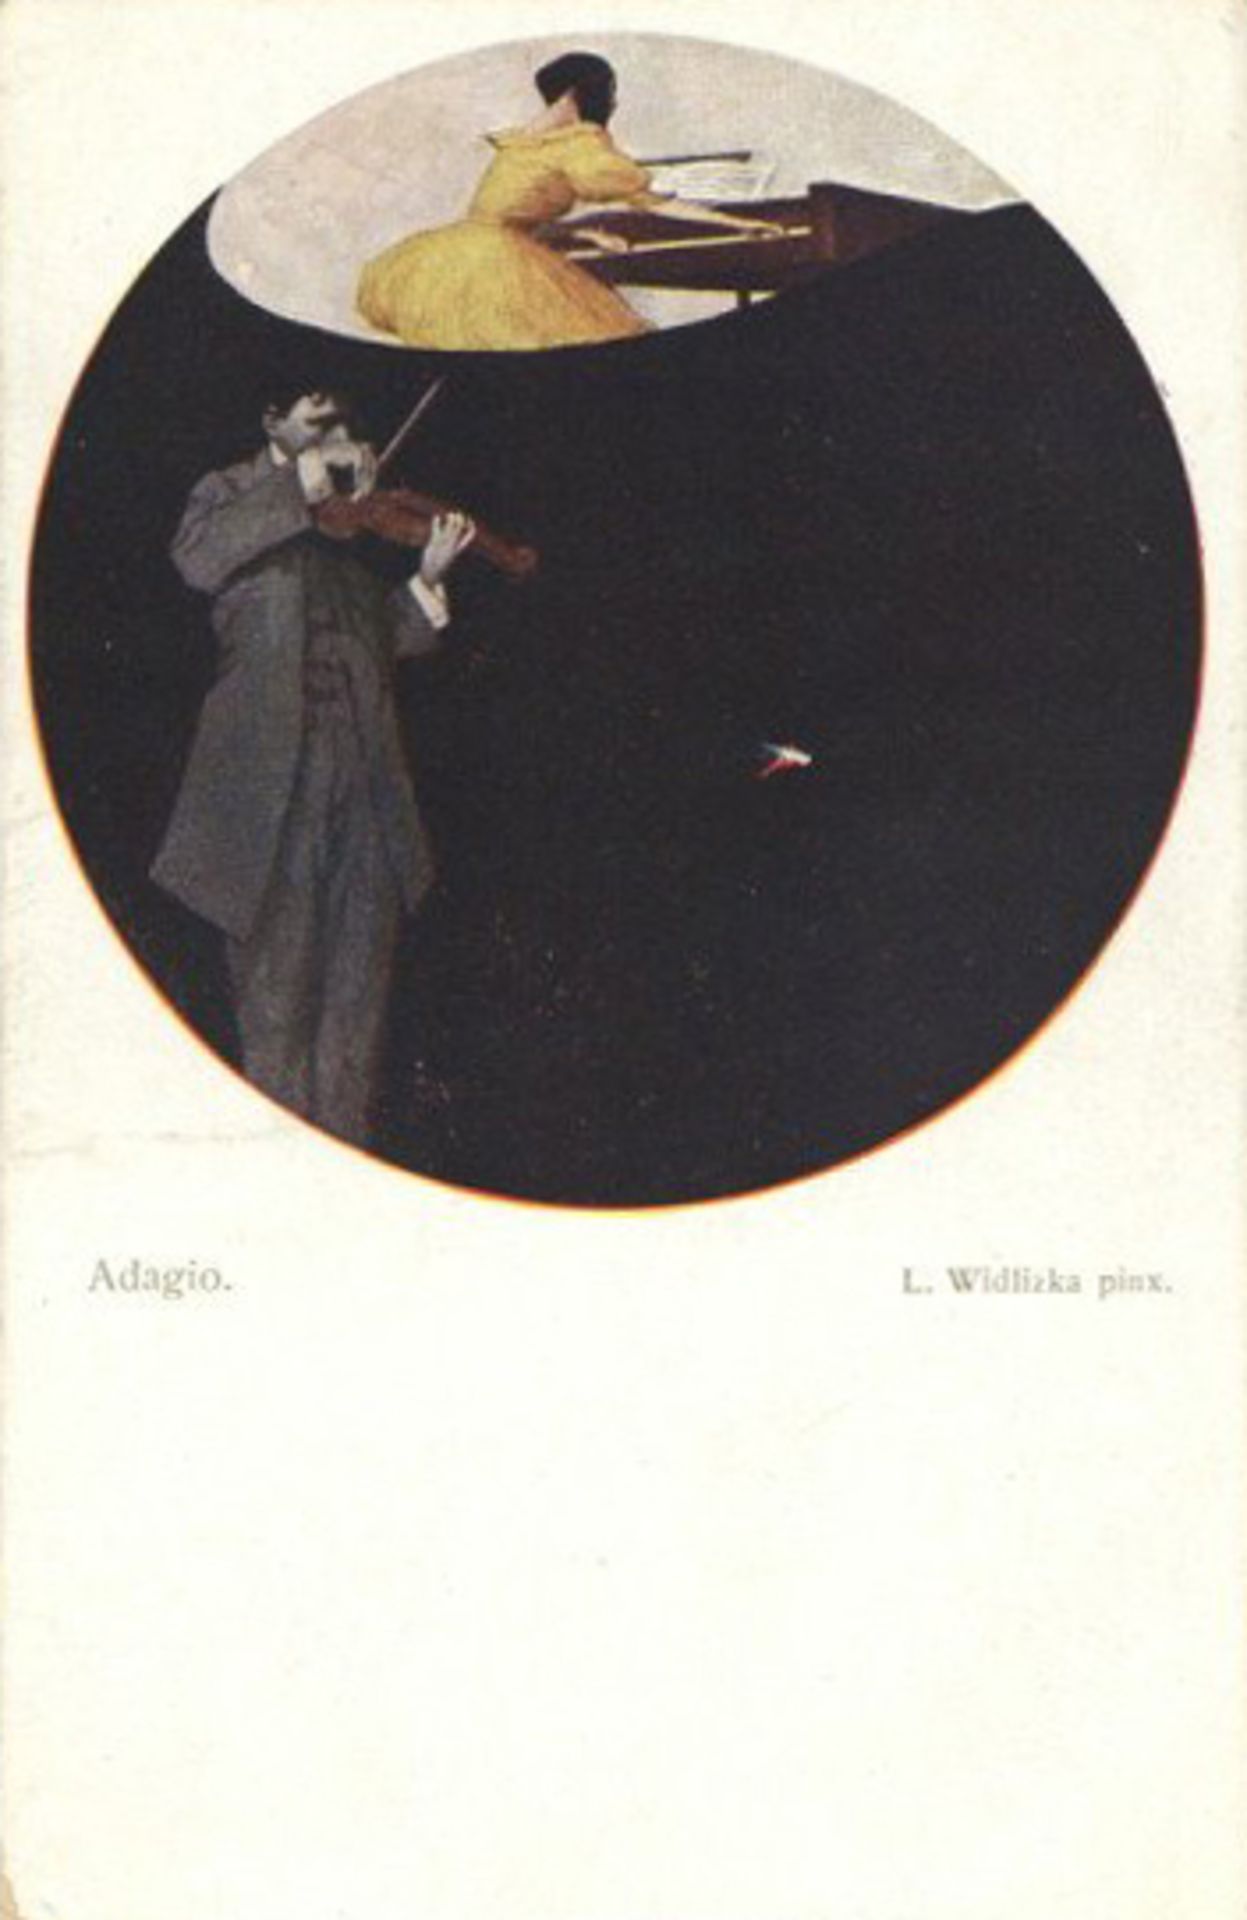 Widlizka, L. Adagio I-II